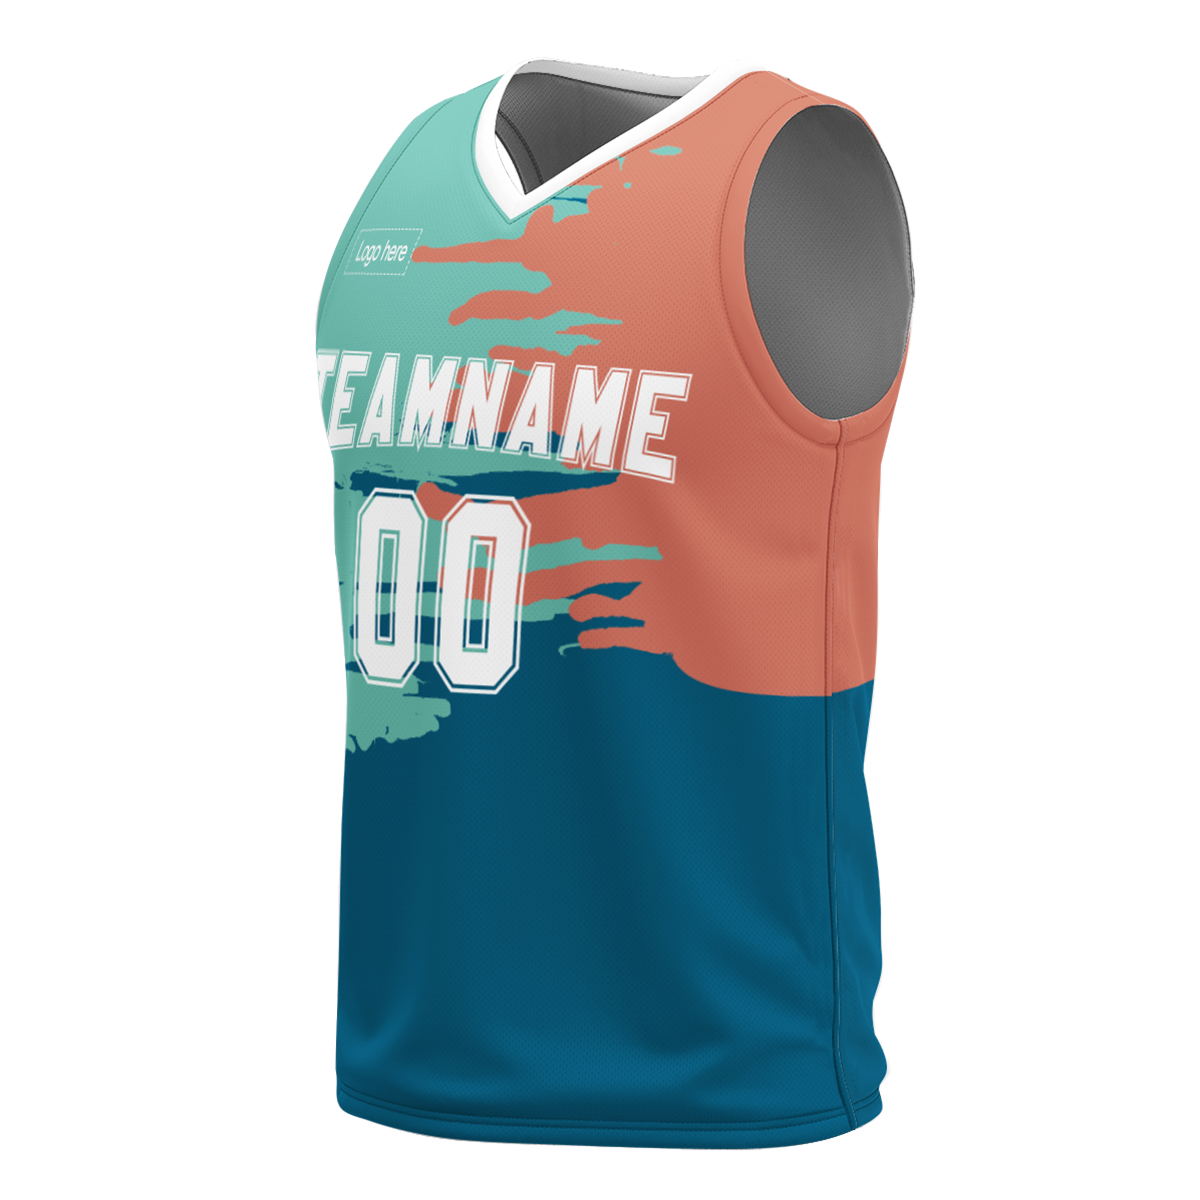 custom-printed-basketball-jerseys-design-sports-jersey-sublimation-comfortable-basketball-wear-uniforms-at-cj-pod-5